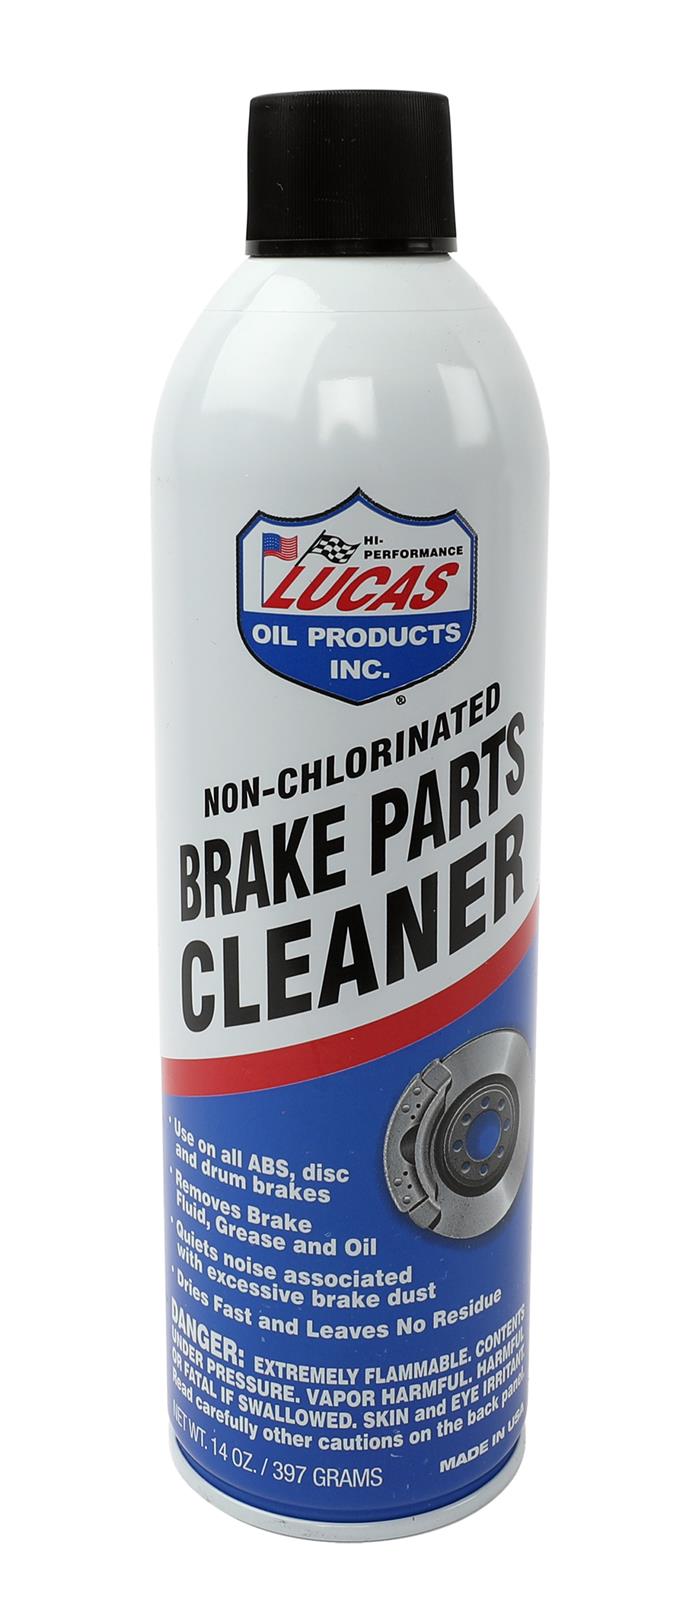 Brake & Parts Cleaner